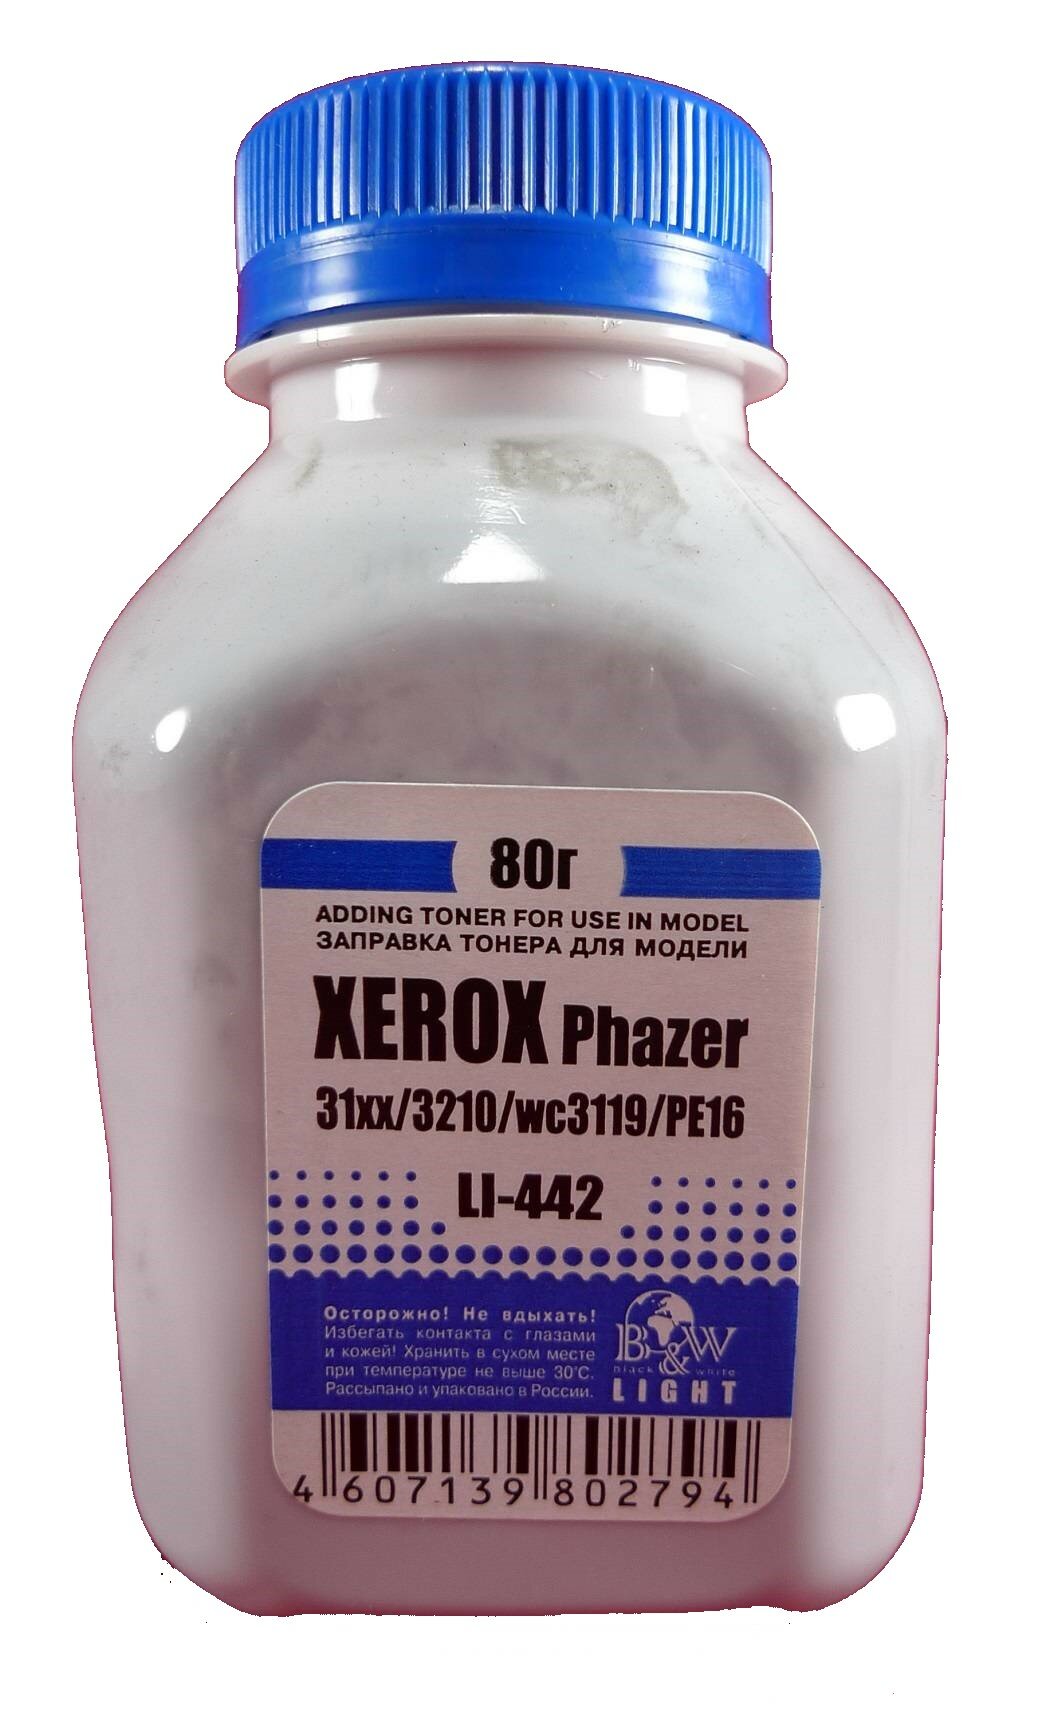 Тонер XEROX Phaser 31xx/3100/3200/3210/WC3119/Pe220, B205/B210/B215 (фл. 80г) Black&White Light фас. Россия